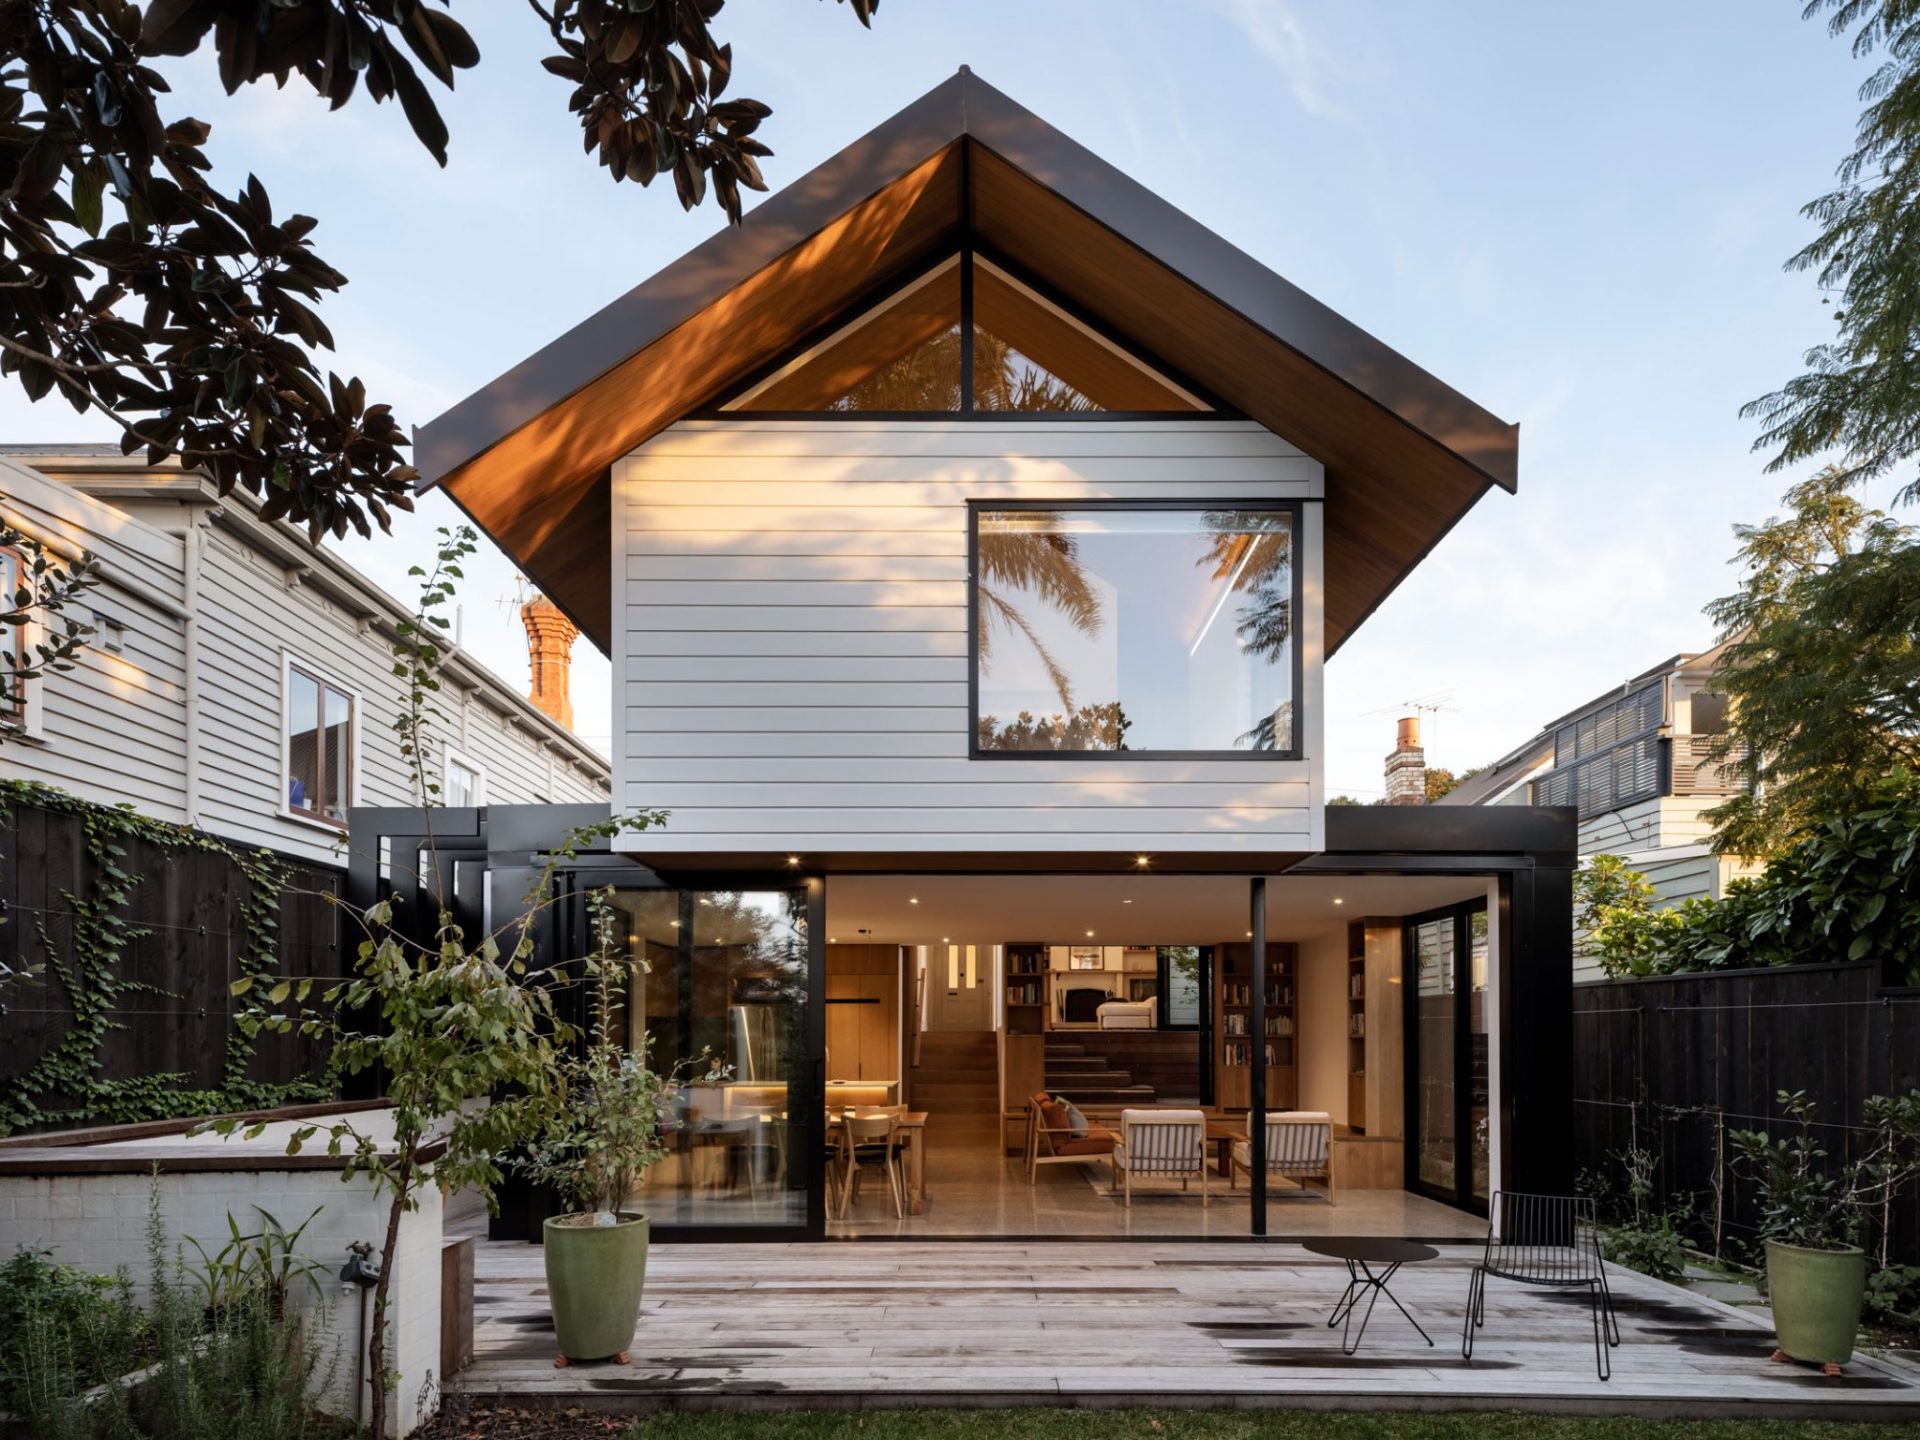 Inspiring Home Design: A Contemporary 2-Story Gable House with Split ...